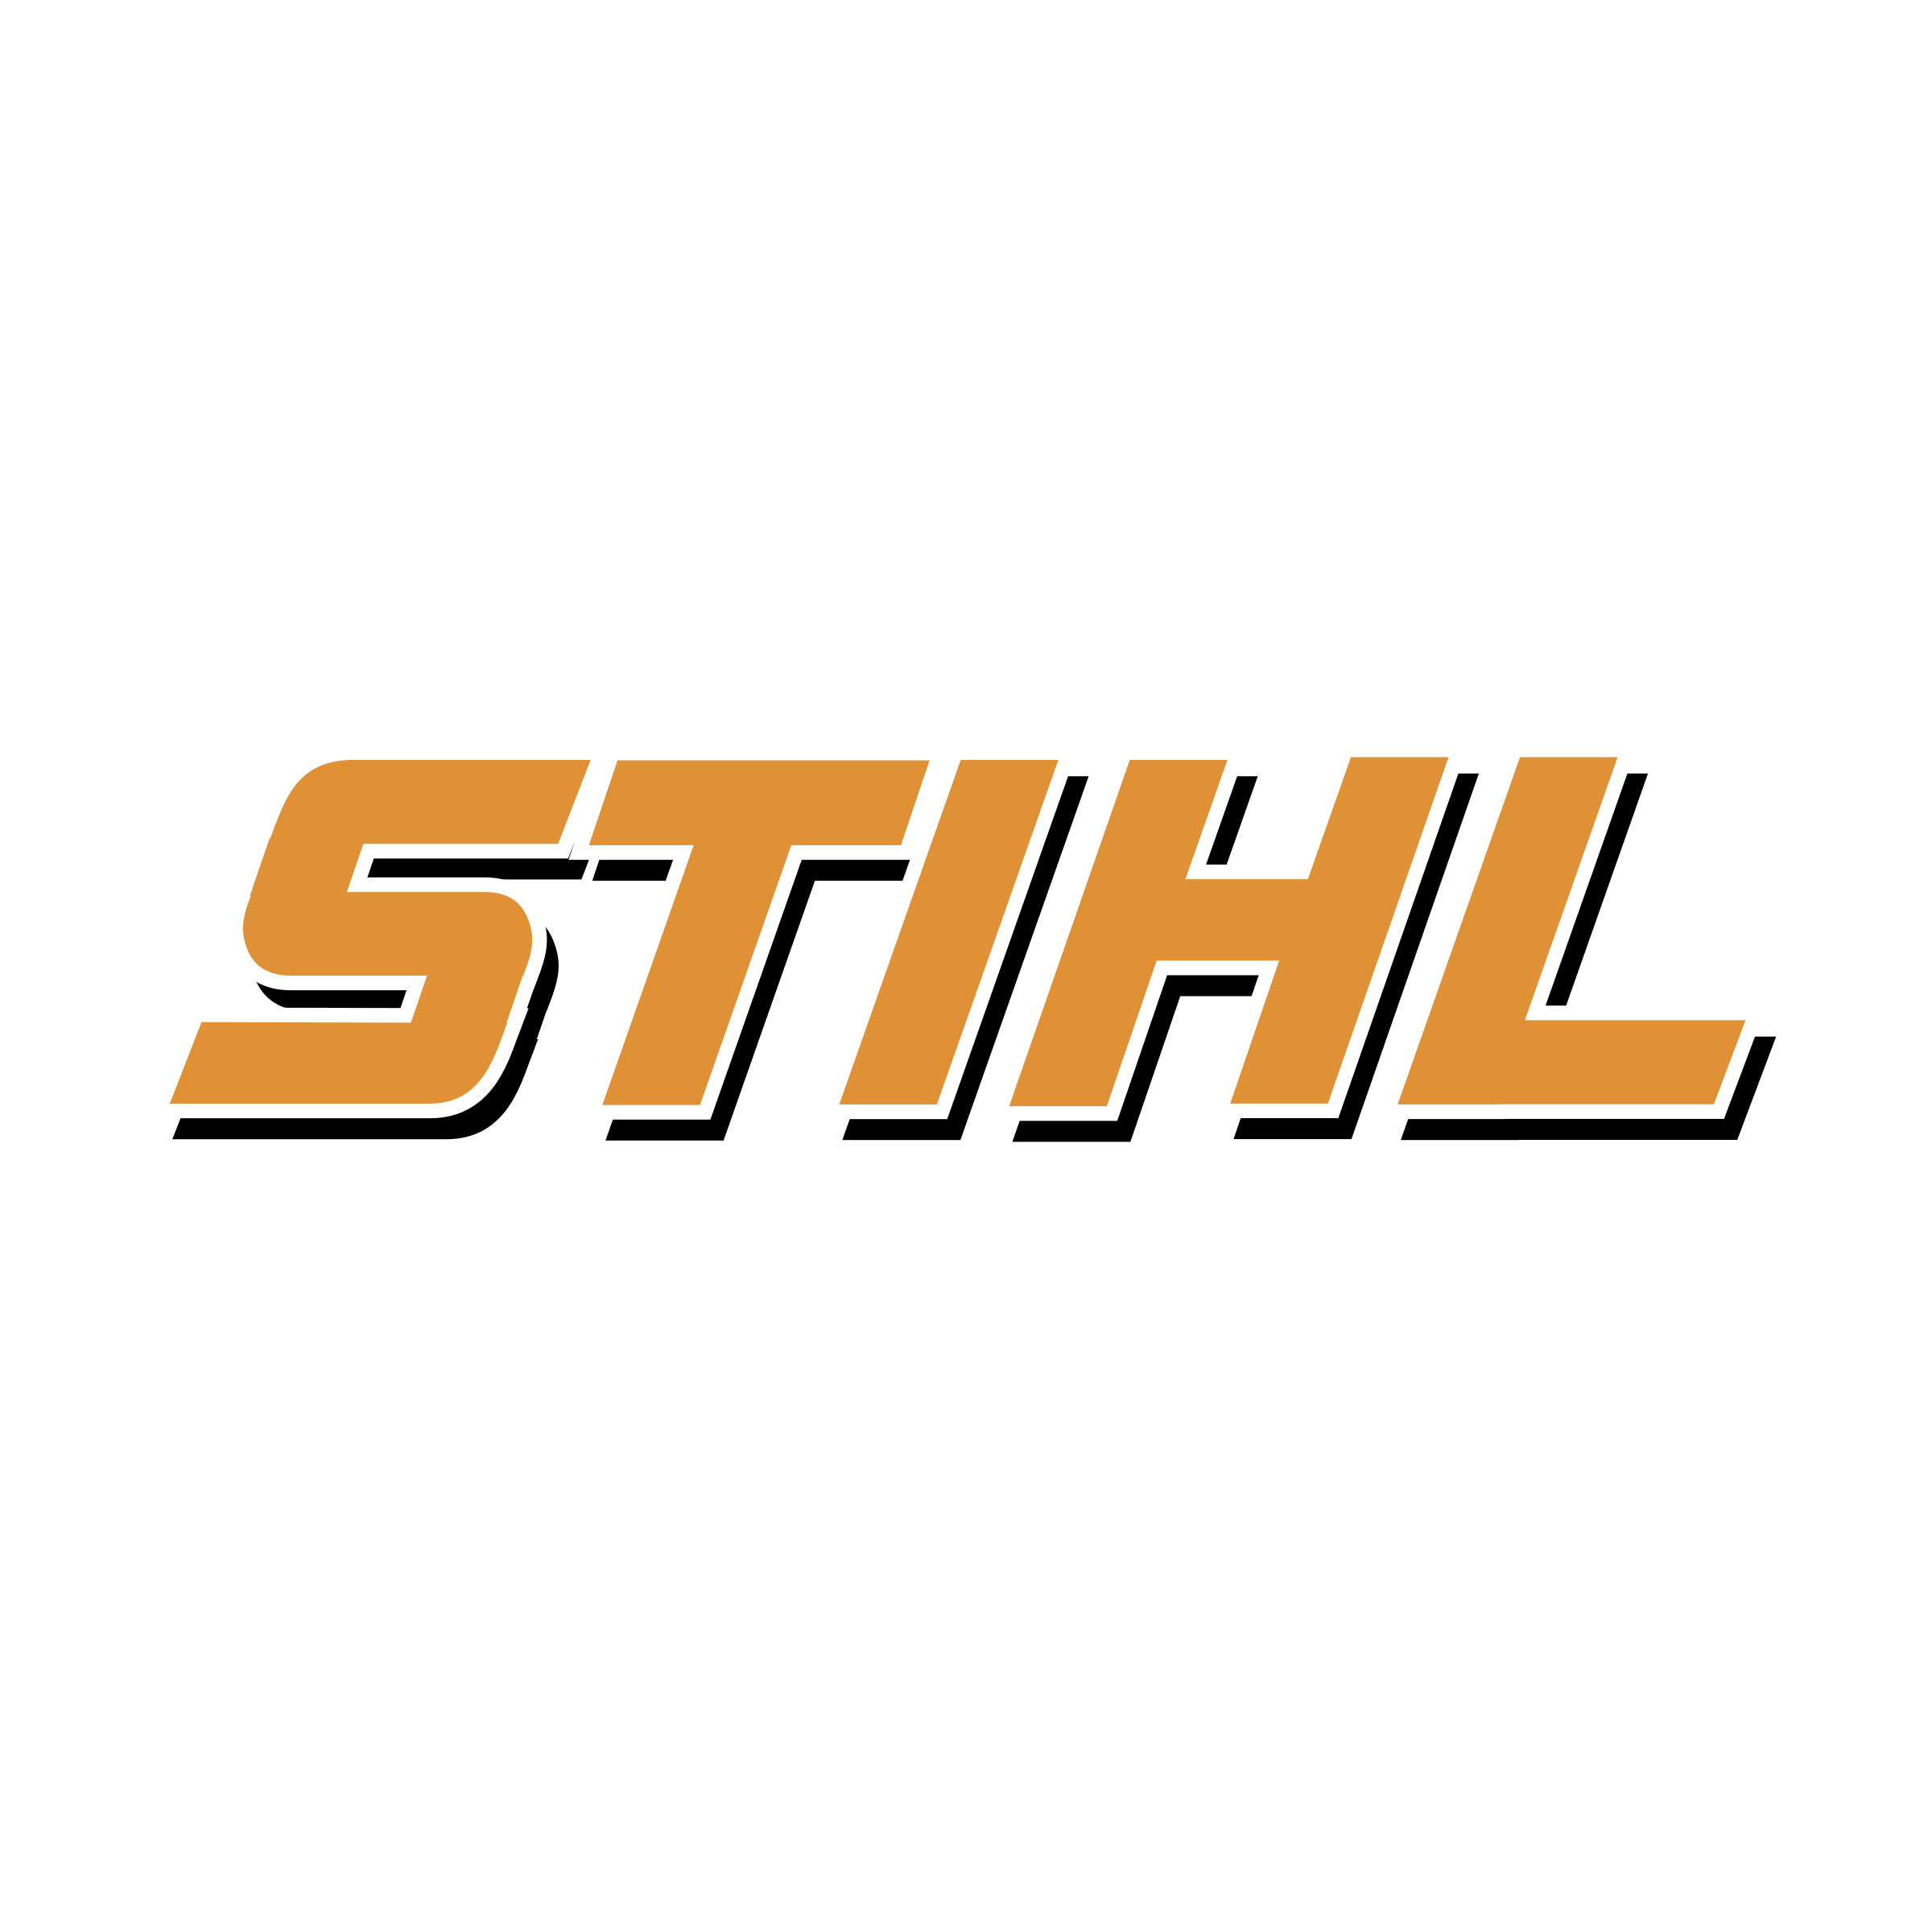 Stihl Logo - Stihl Logo PNG Transparent & SVG Vector - Freebie Supply